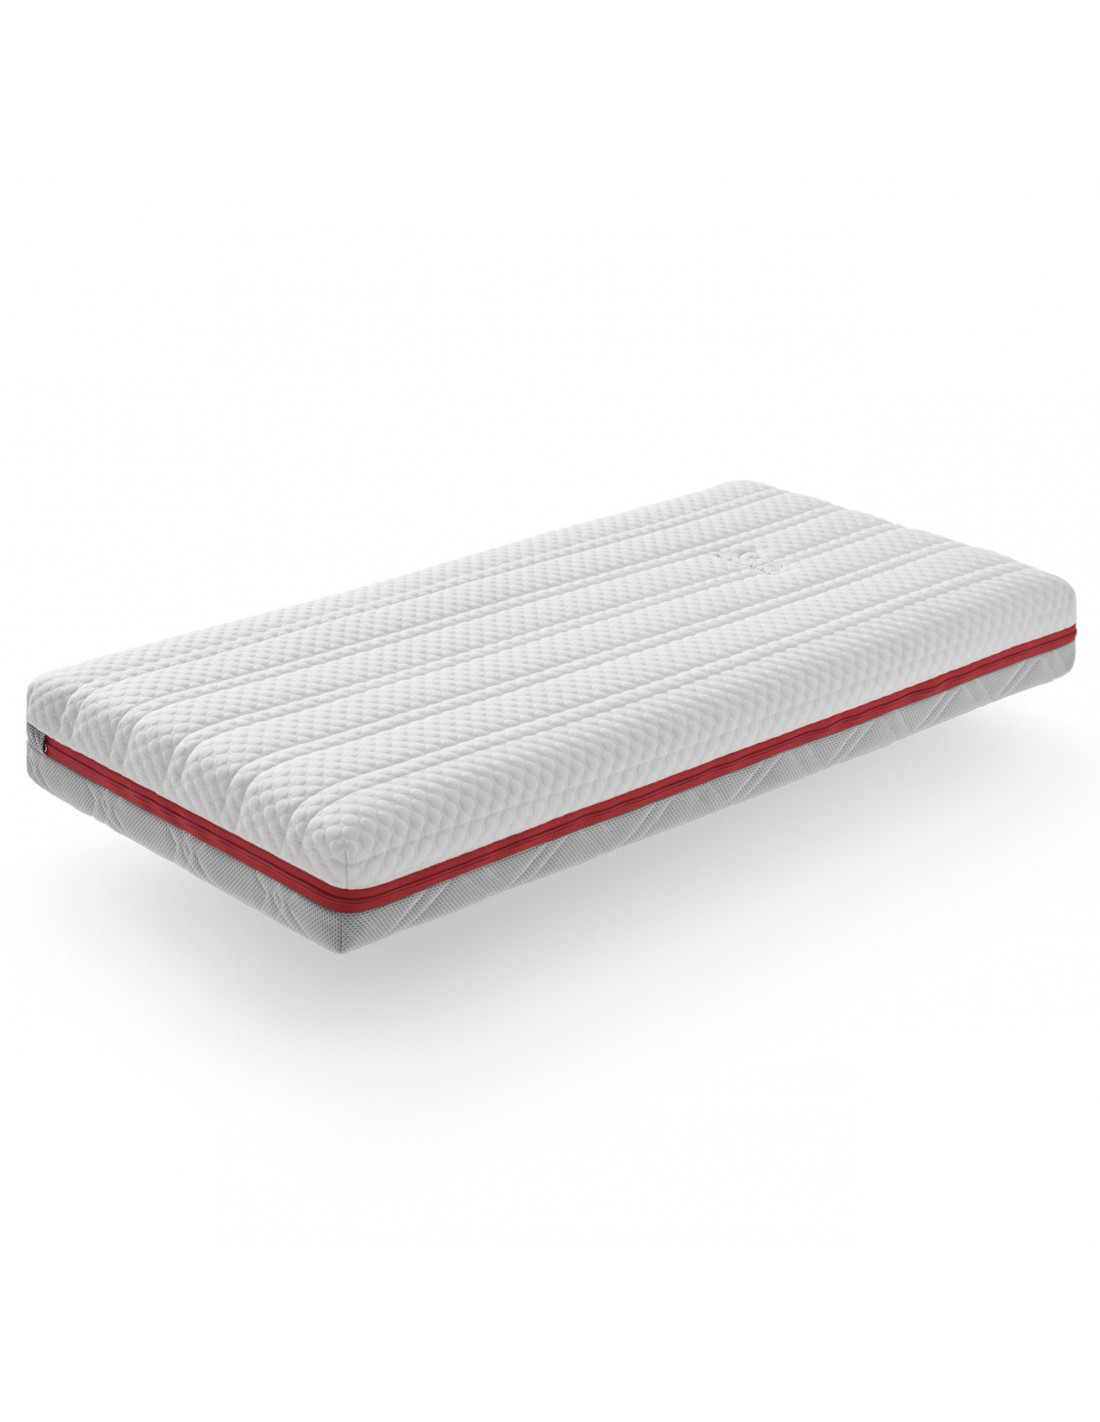 https://img.paranenesynenas.es/49014-thickbox_default/colchon-de-cuna-jiraff-de-my-baby-mattress.jpg